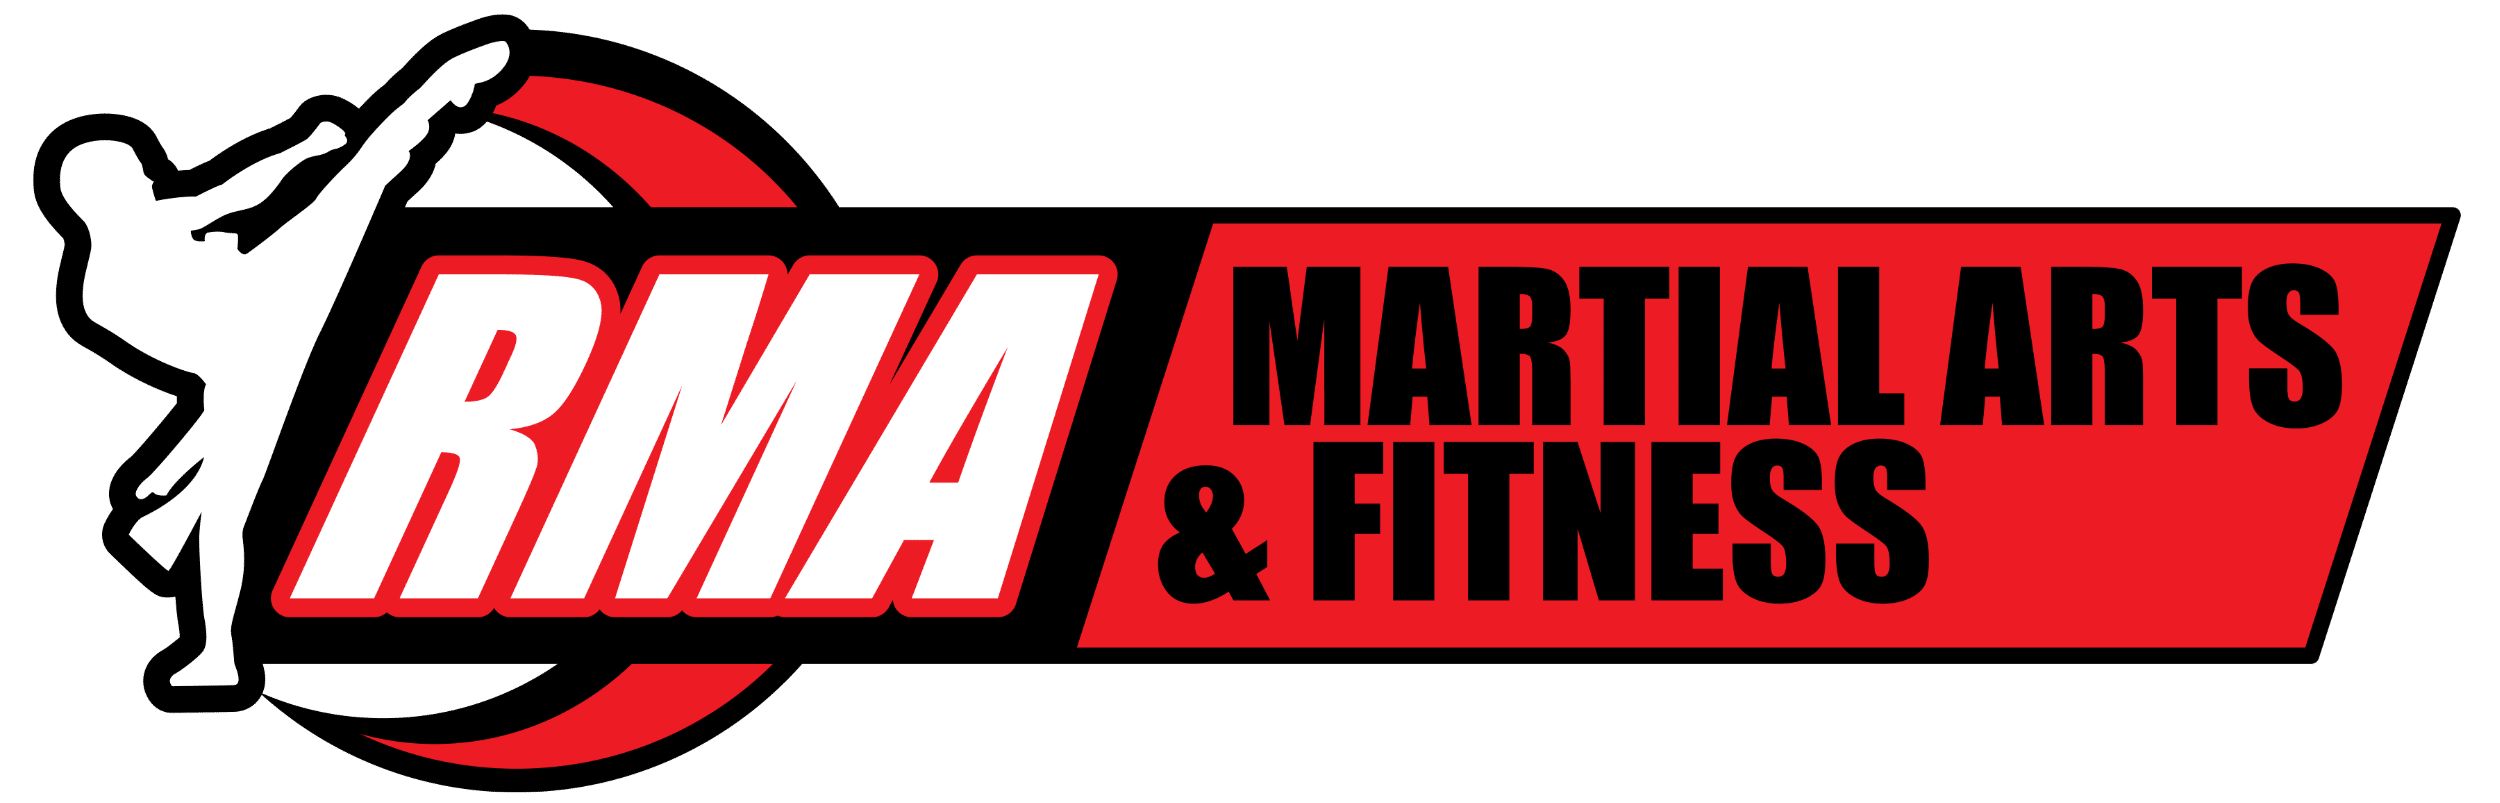 RMA Right Mental Attitude Martial Arts & Fitness logo